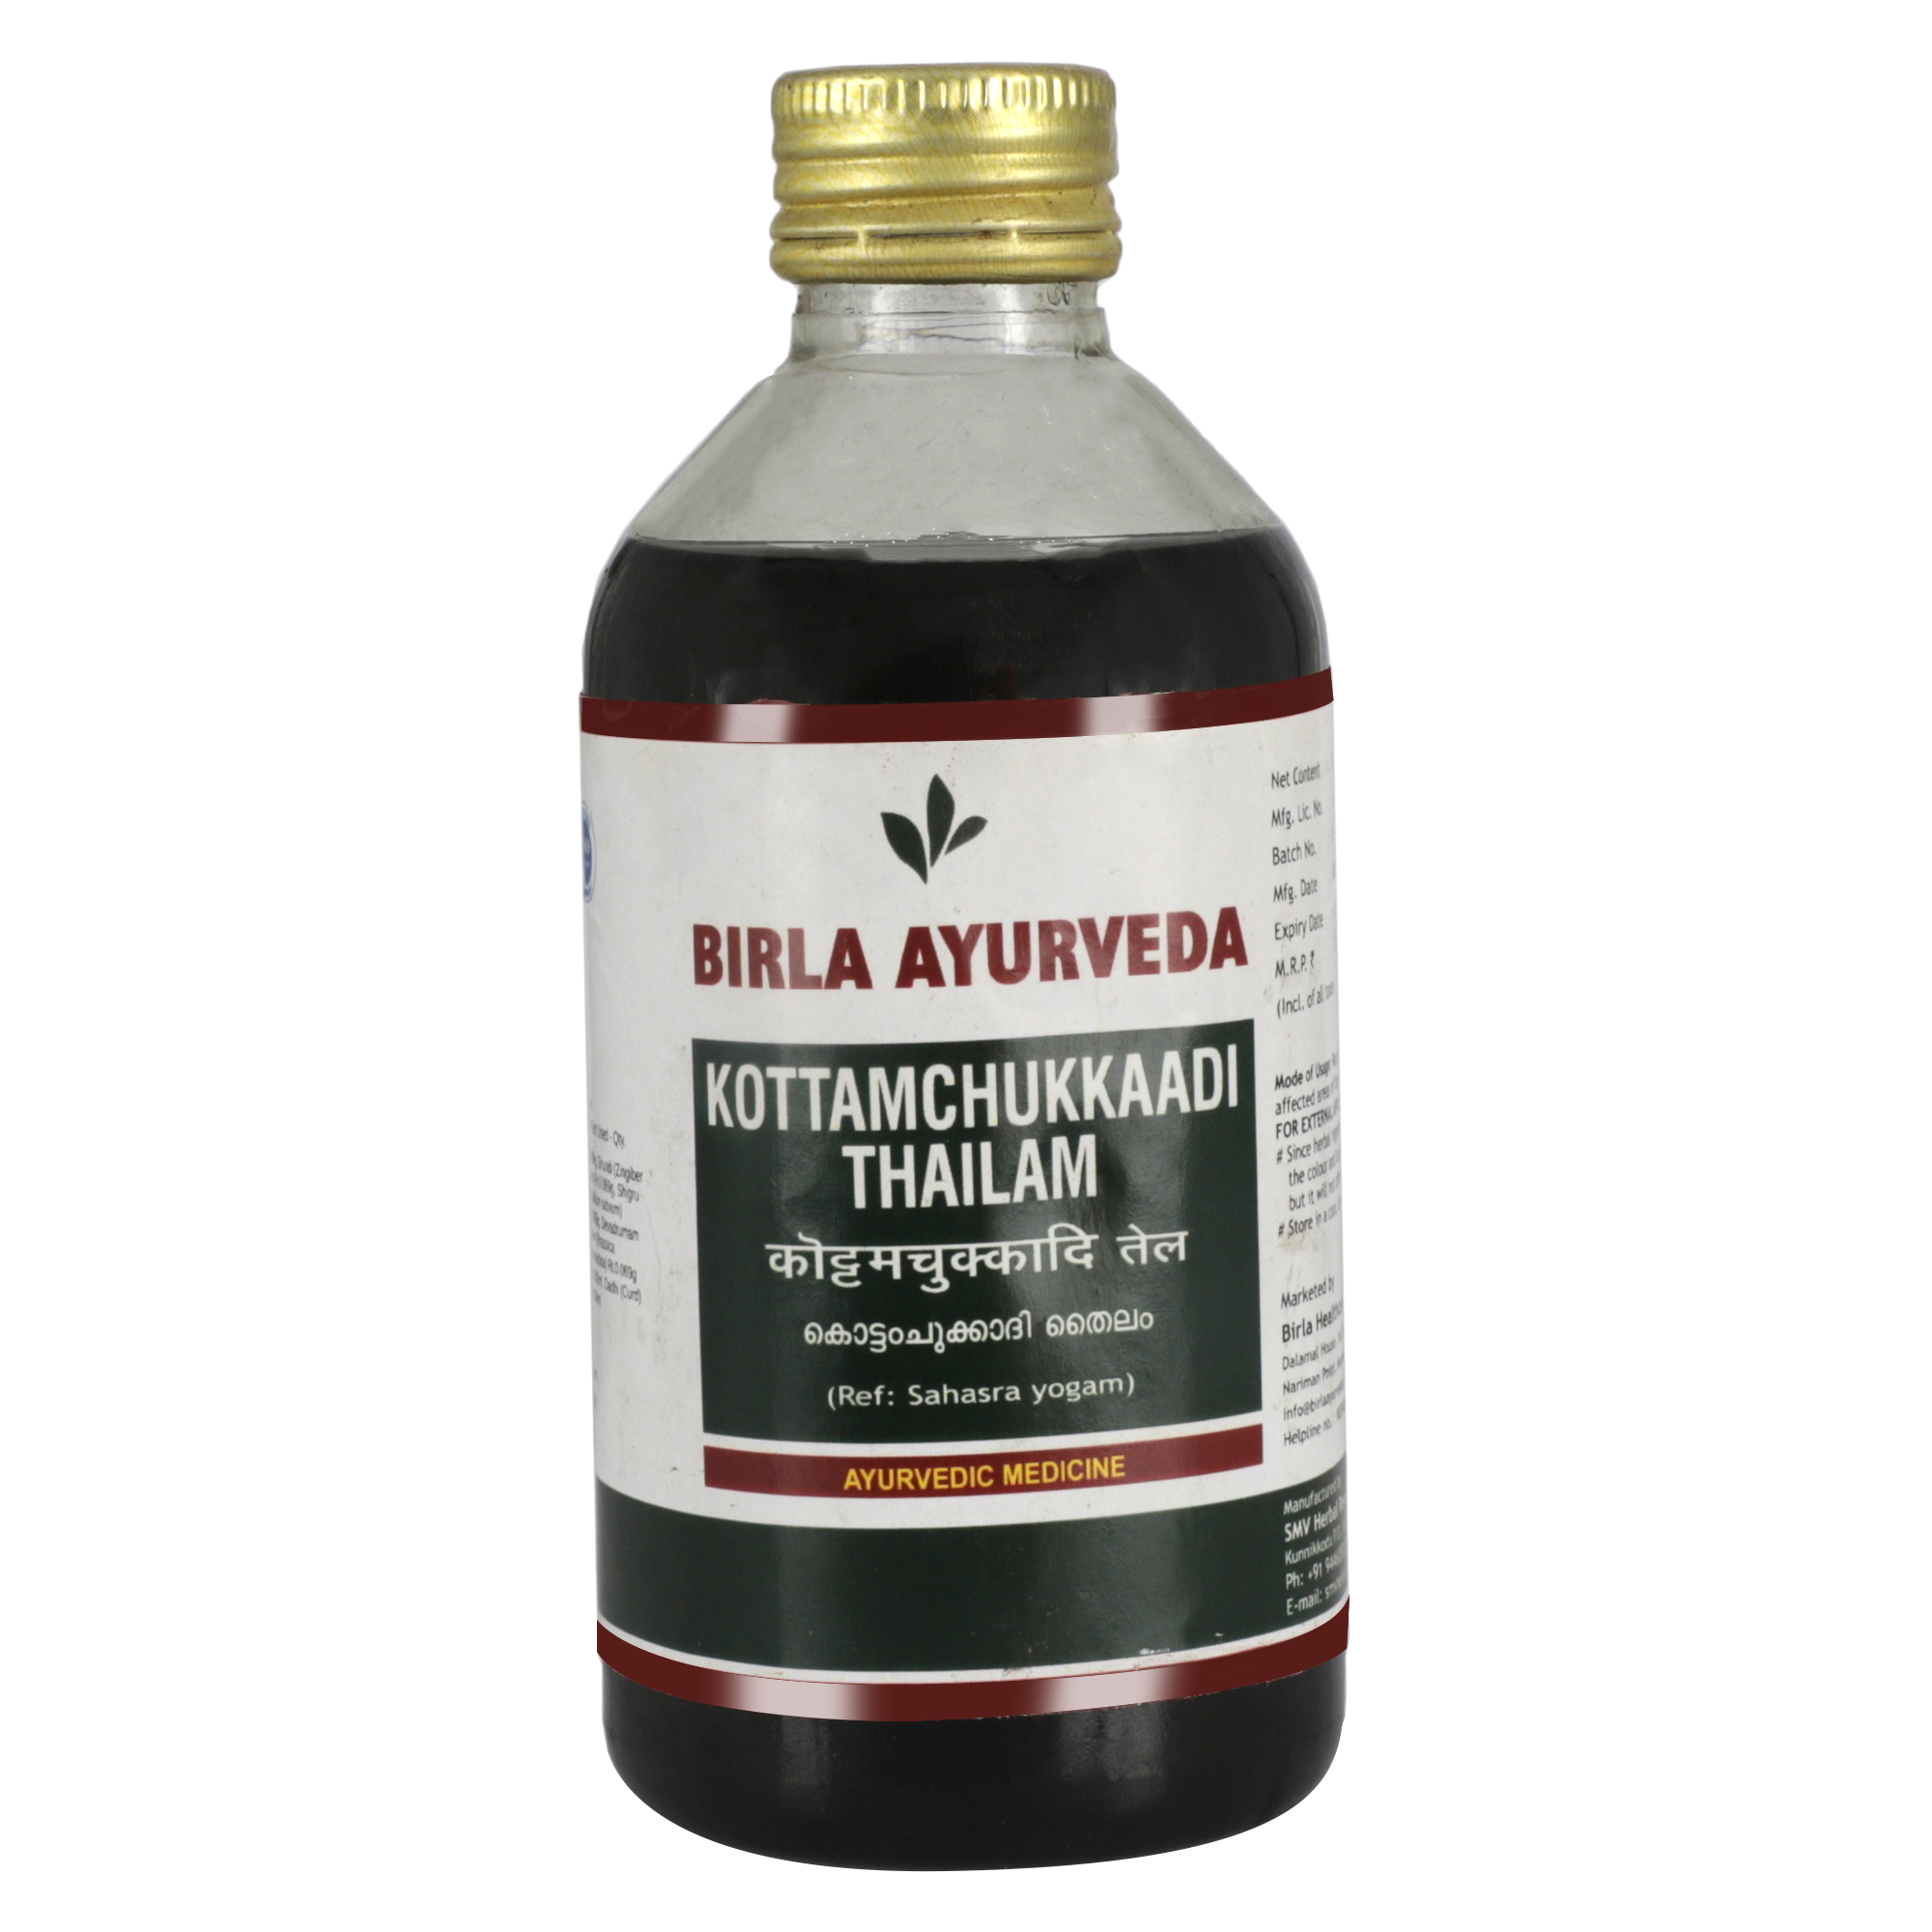 Buy Basic Ayurveda Kottamchukkaadi Thailam at Best Price Online